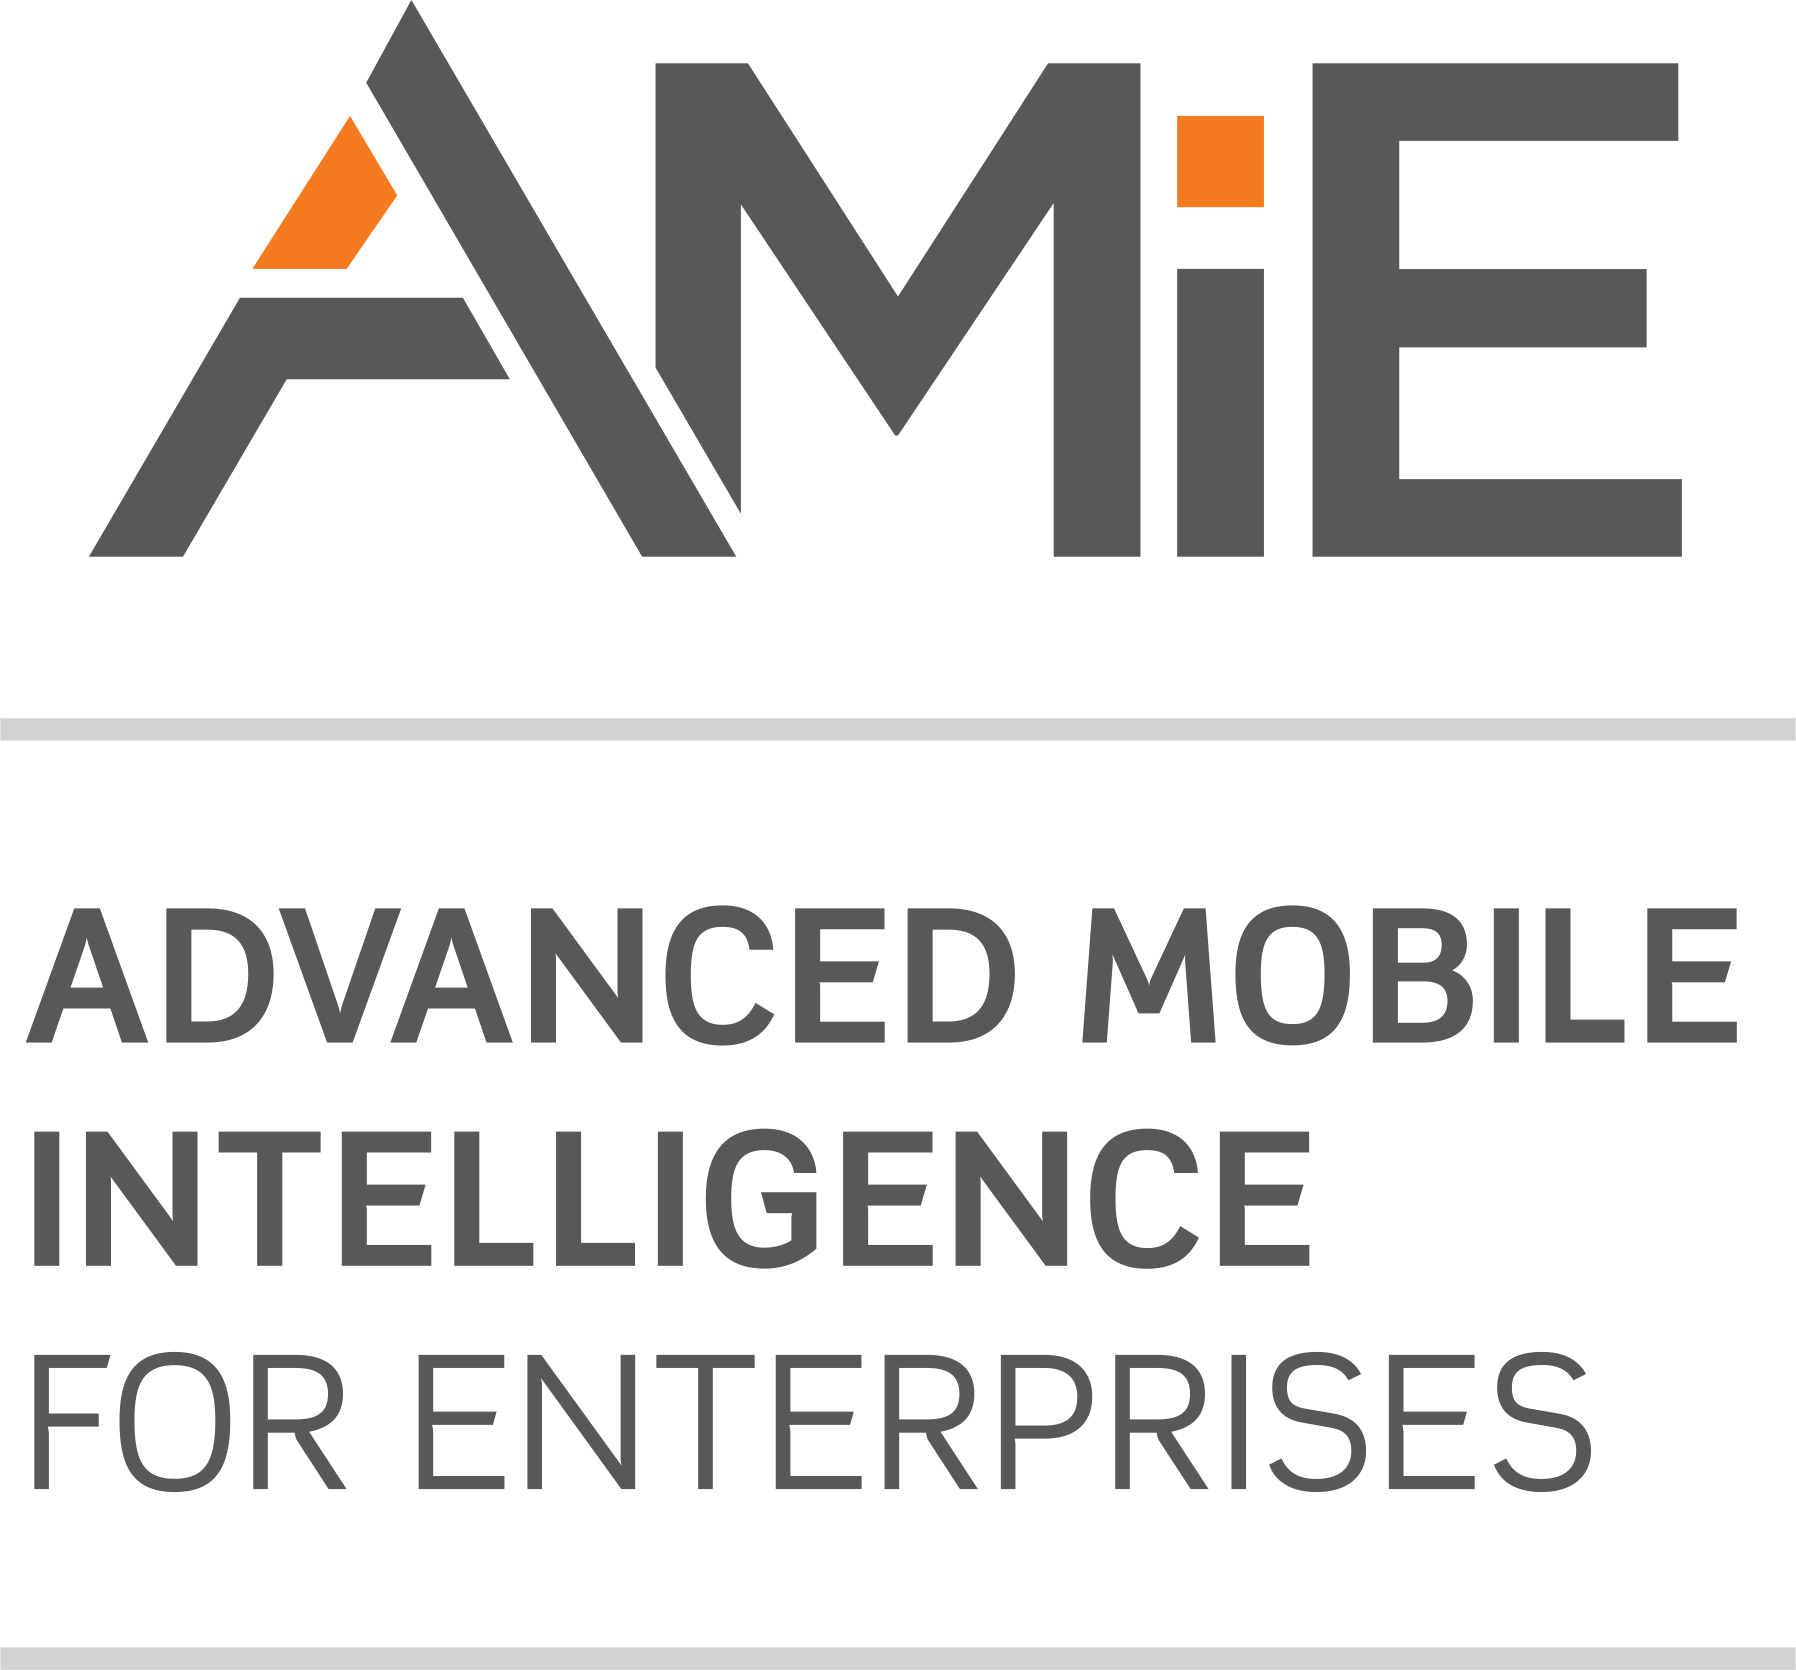 AMIE — Advanced Mobile Intelligence for Enterprises